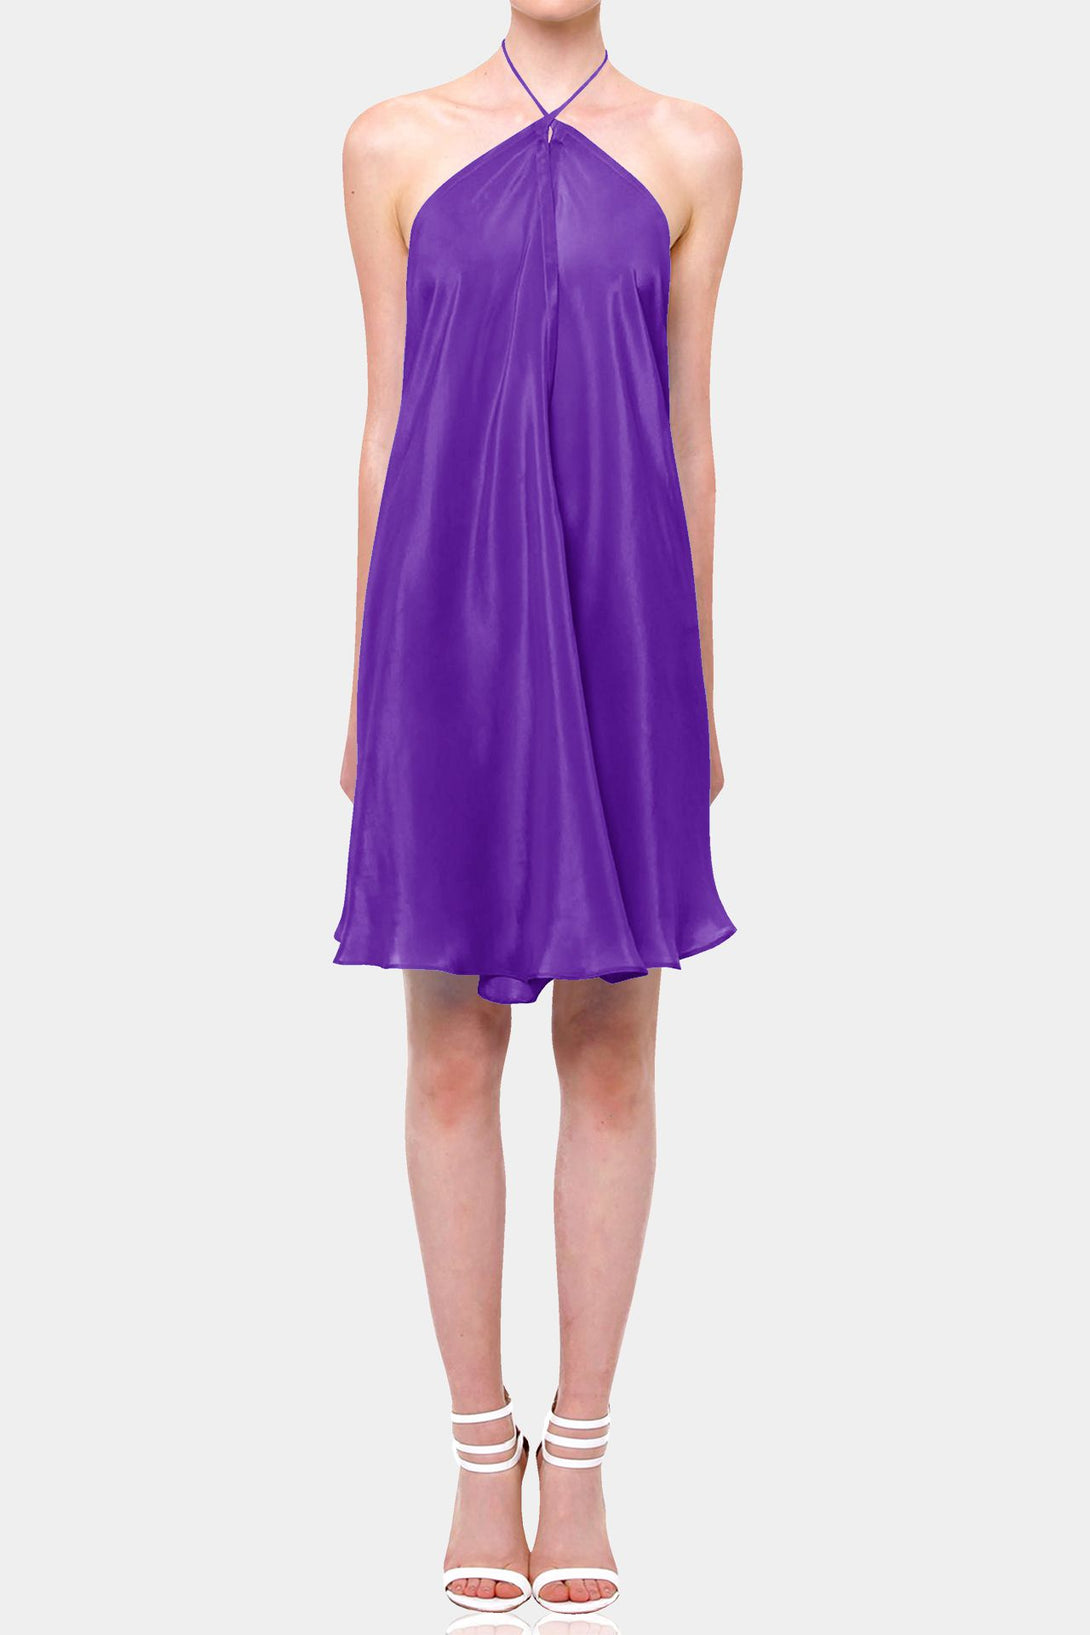  dark purple mini dress, Shahida Parides, sexy short dresses, short sleeveless dress,